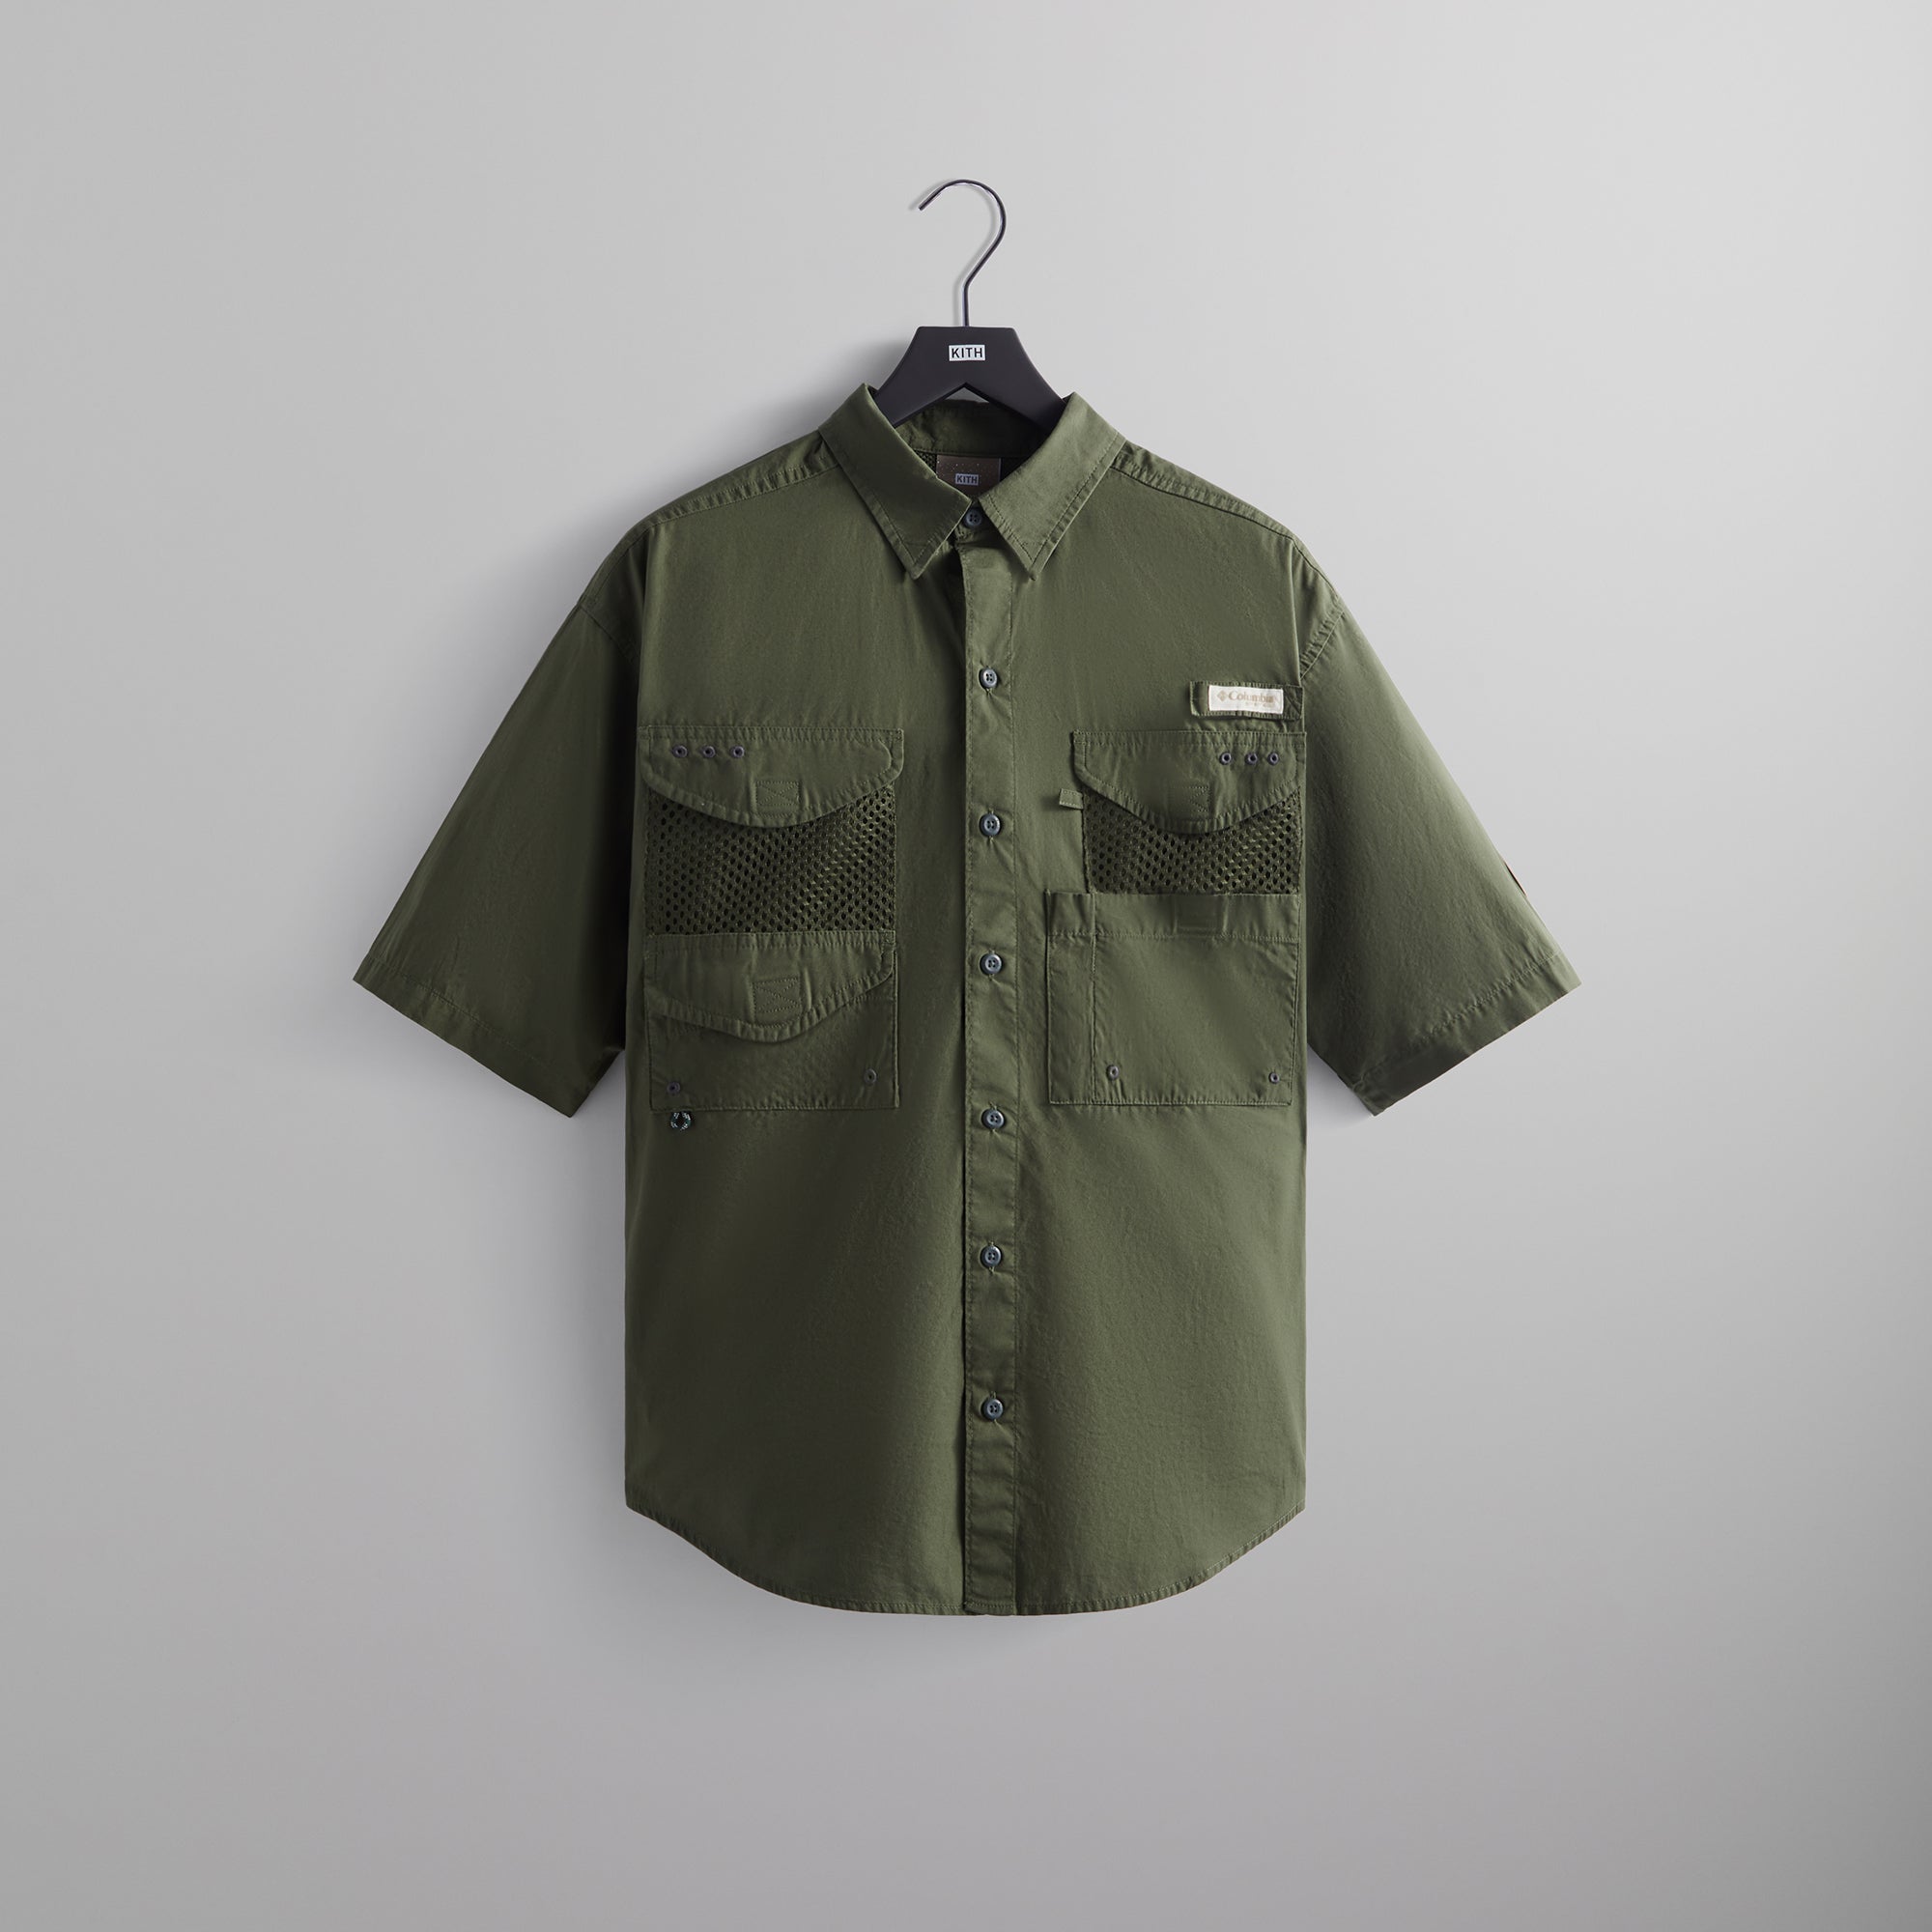 Kith for Columbia PFG Short Sleeve Shirt - Surplus Green